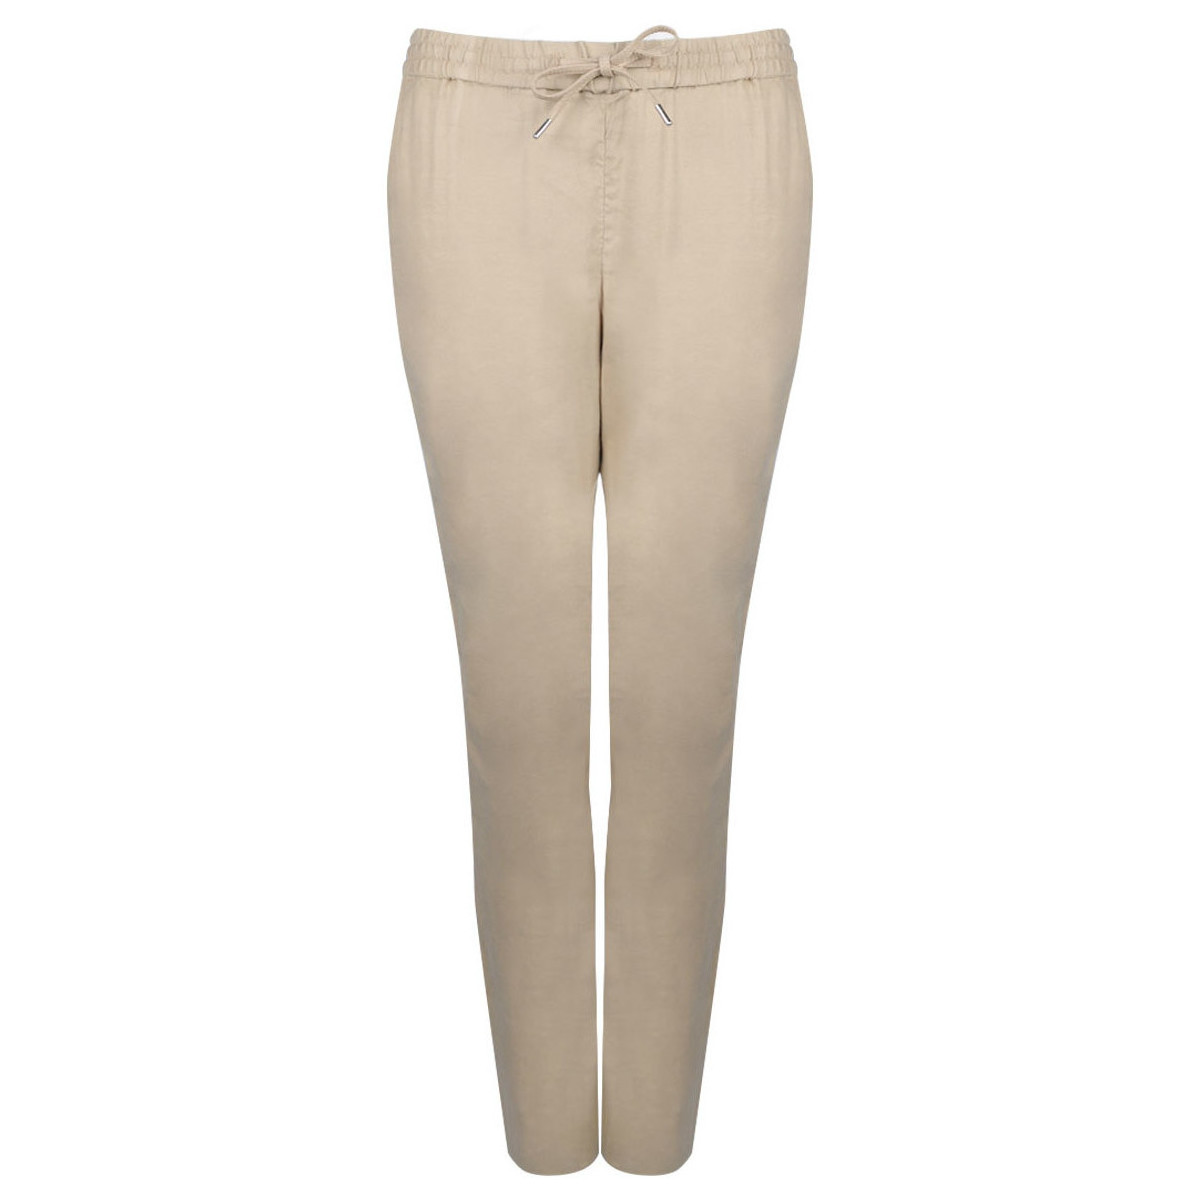 Îmbracaminte Femei Pantaloni  Gant 4150076 / Summer Linen Bej